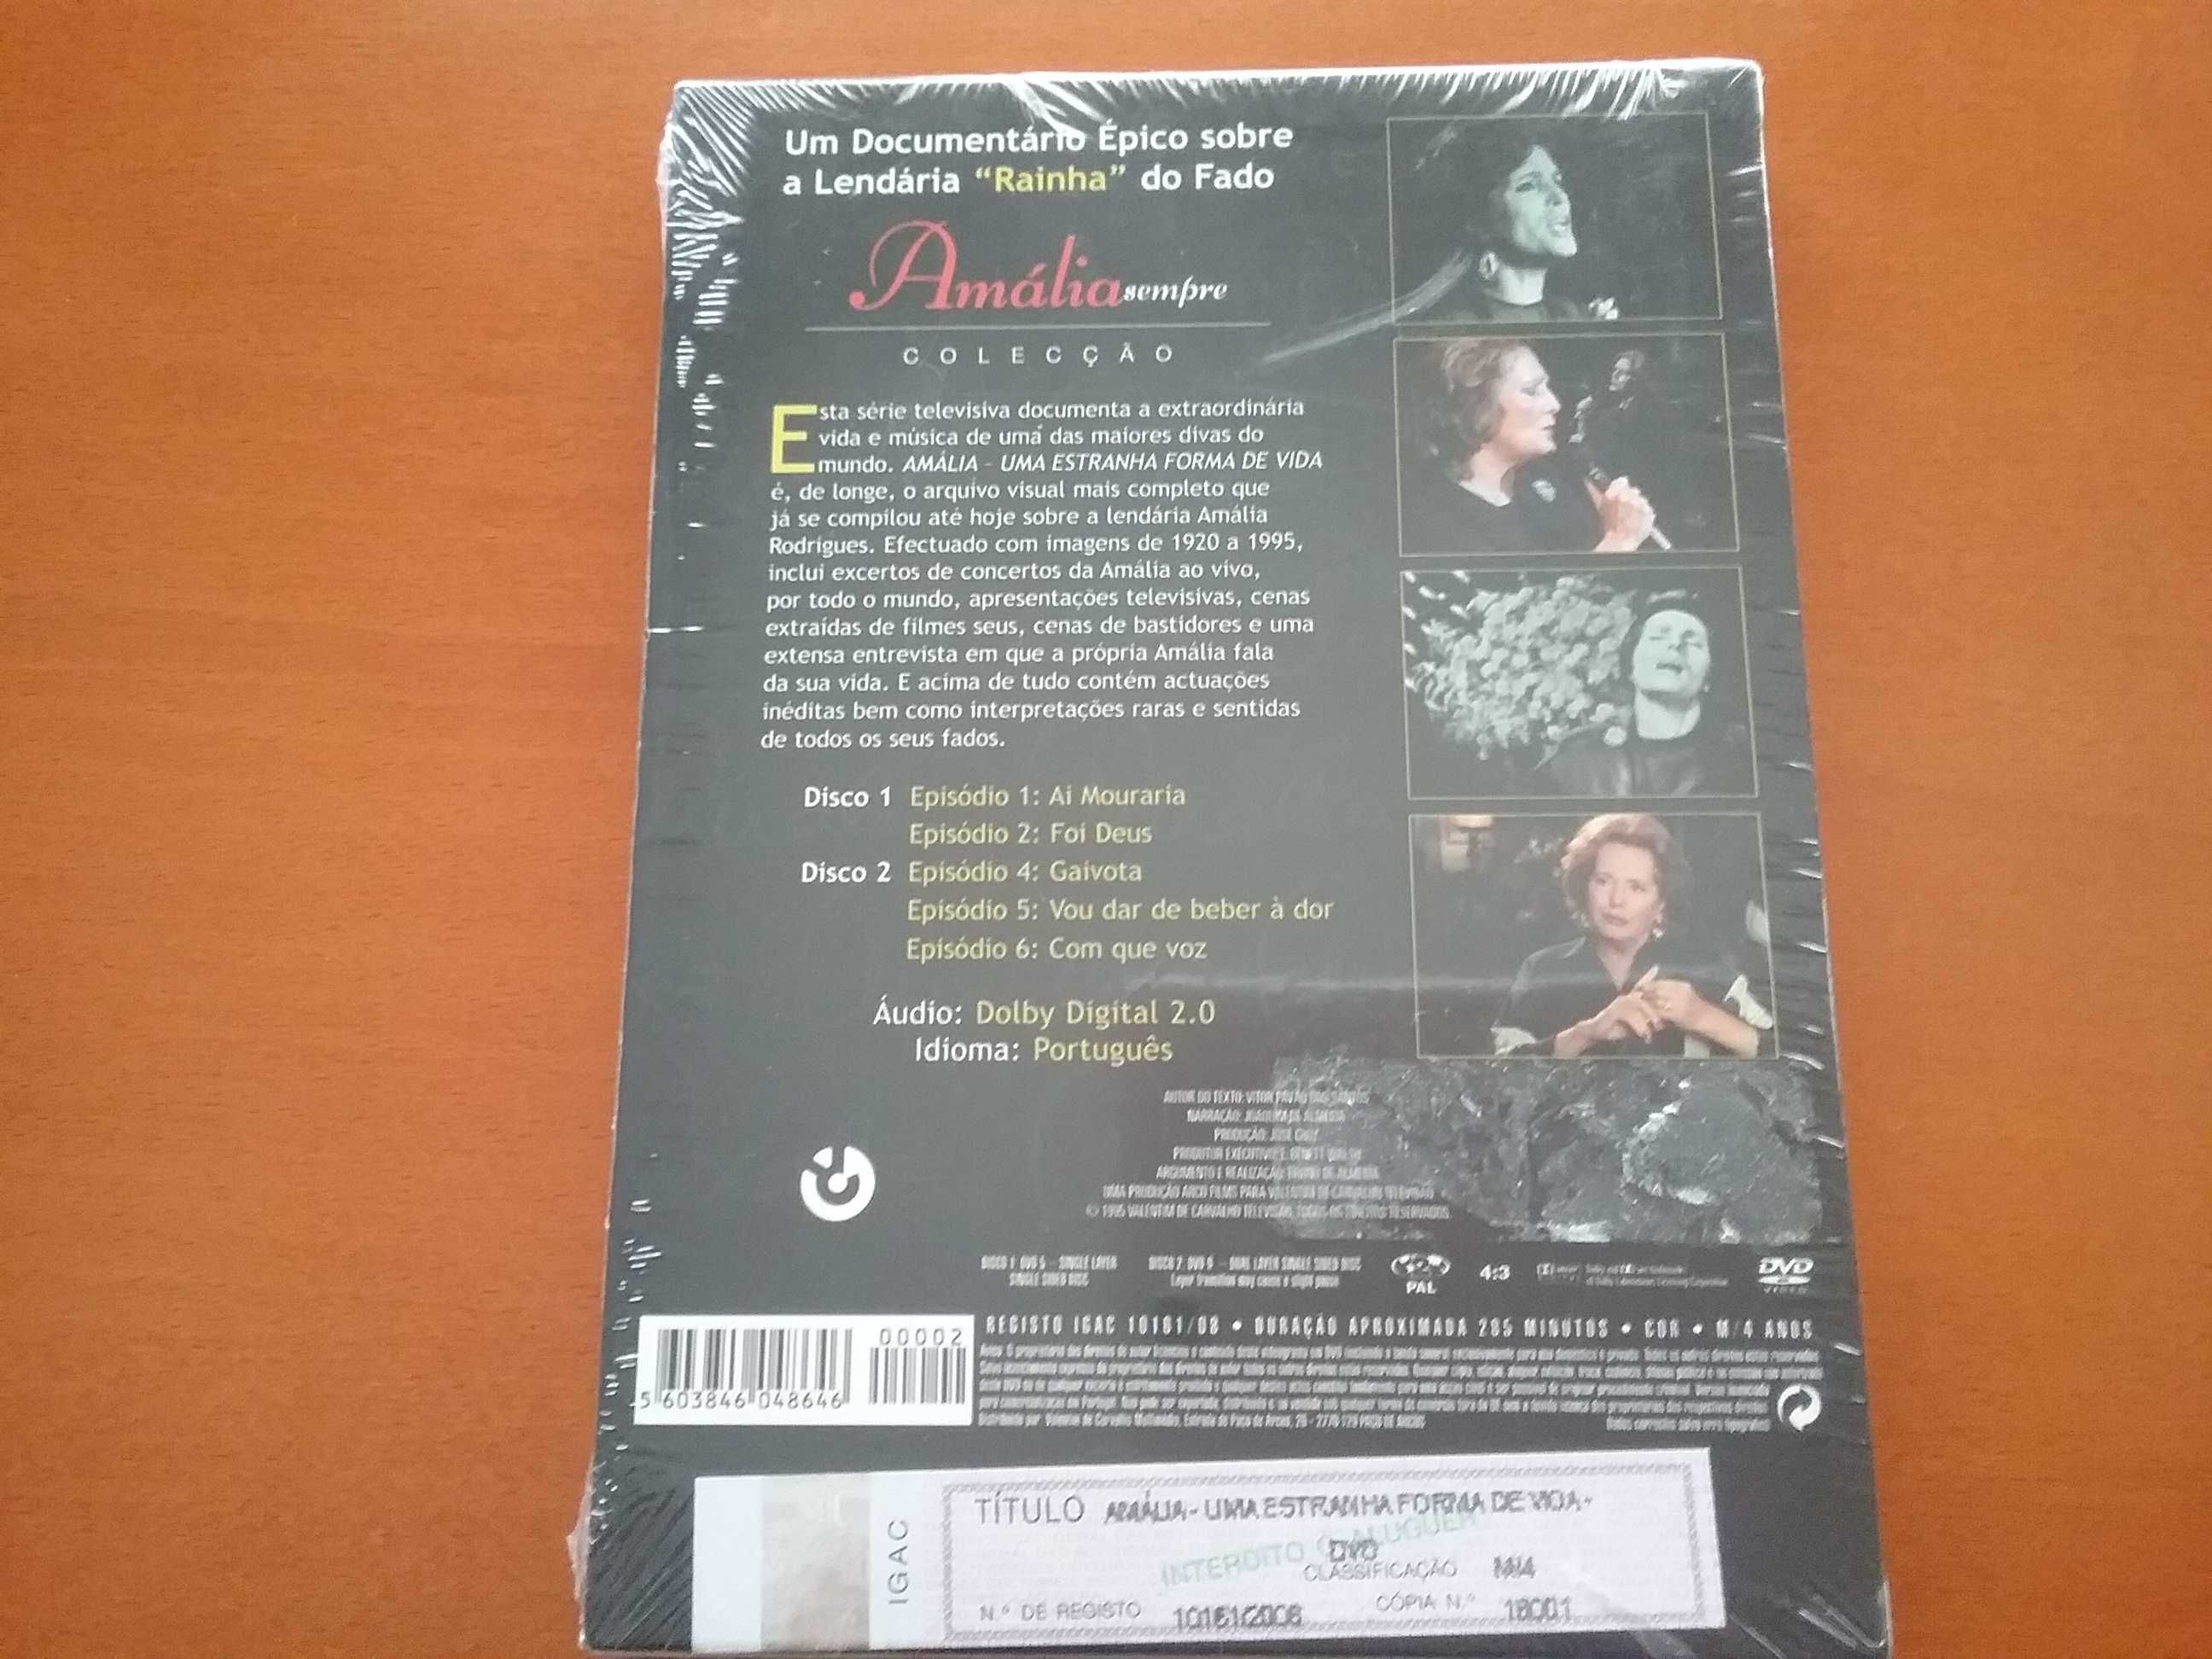 Amália Sempre dvd